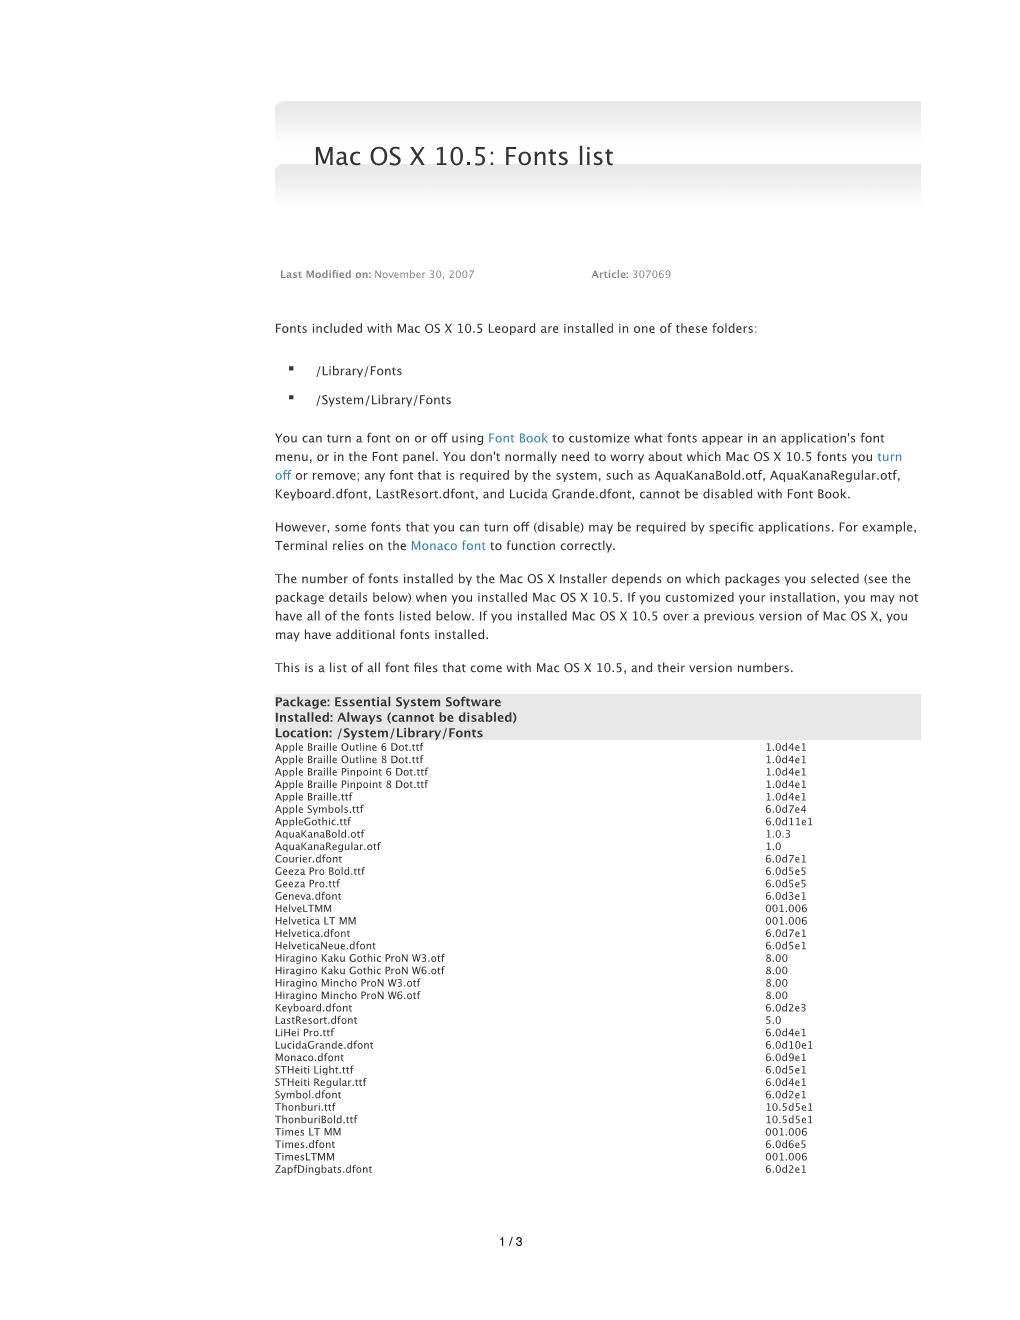 Mac OS X 10.5: Fonts List